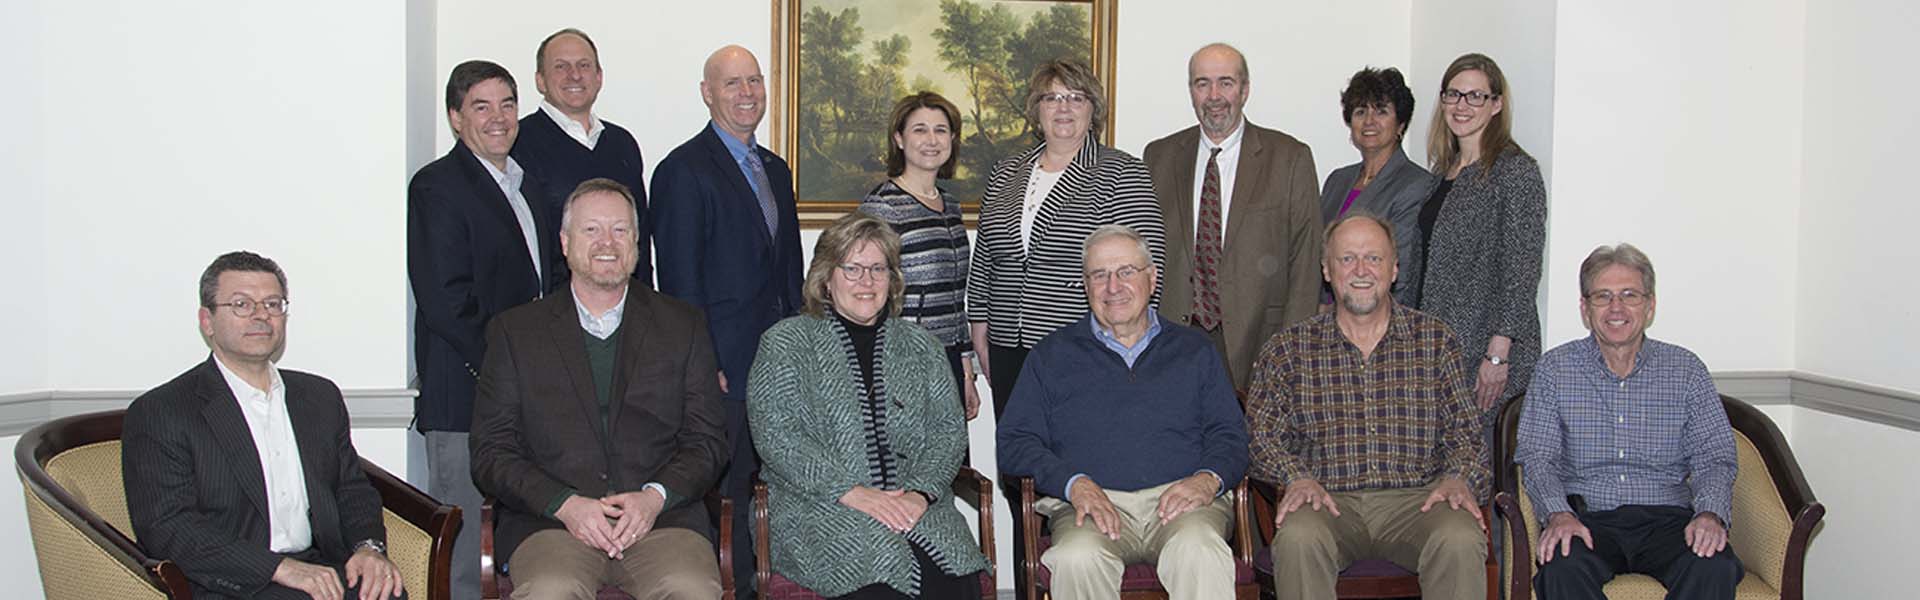 External Advisory Board Group Photo 2018